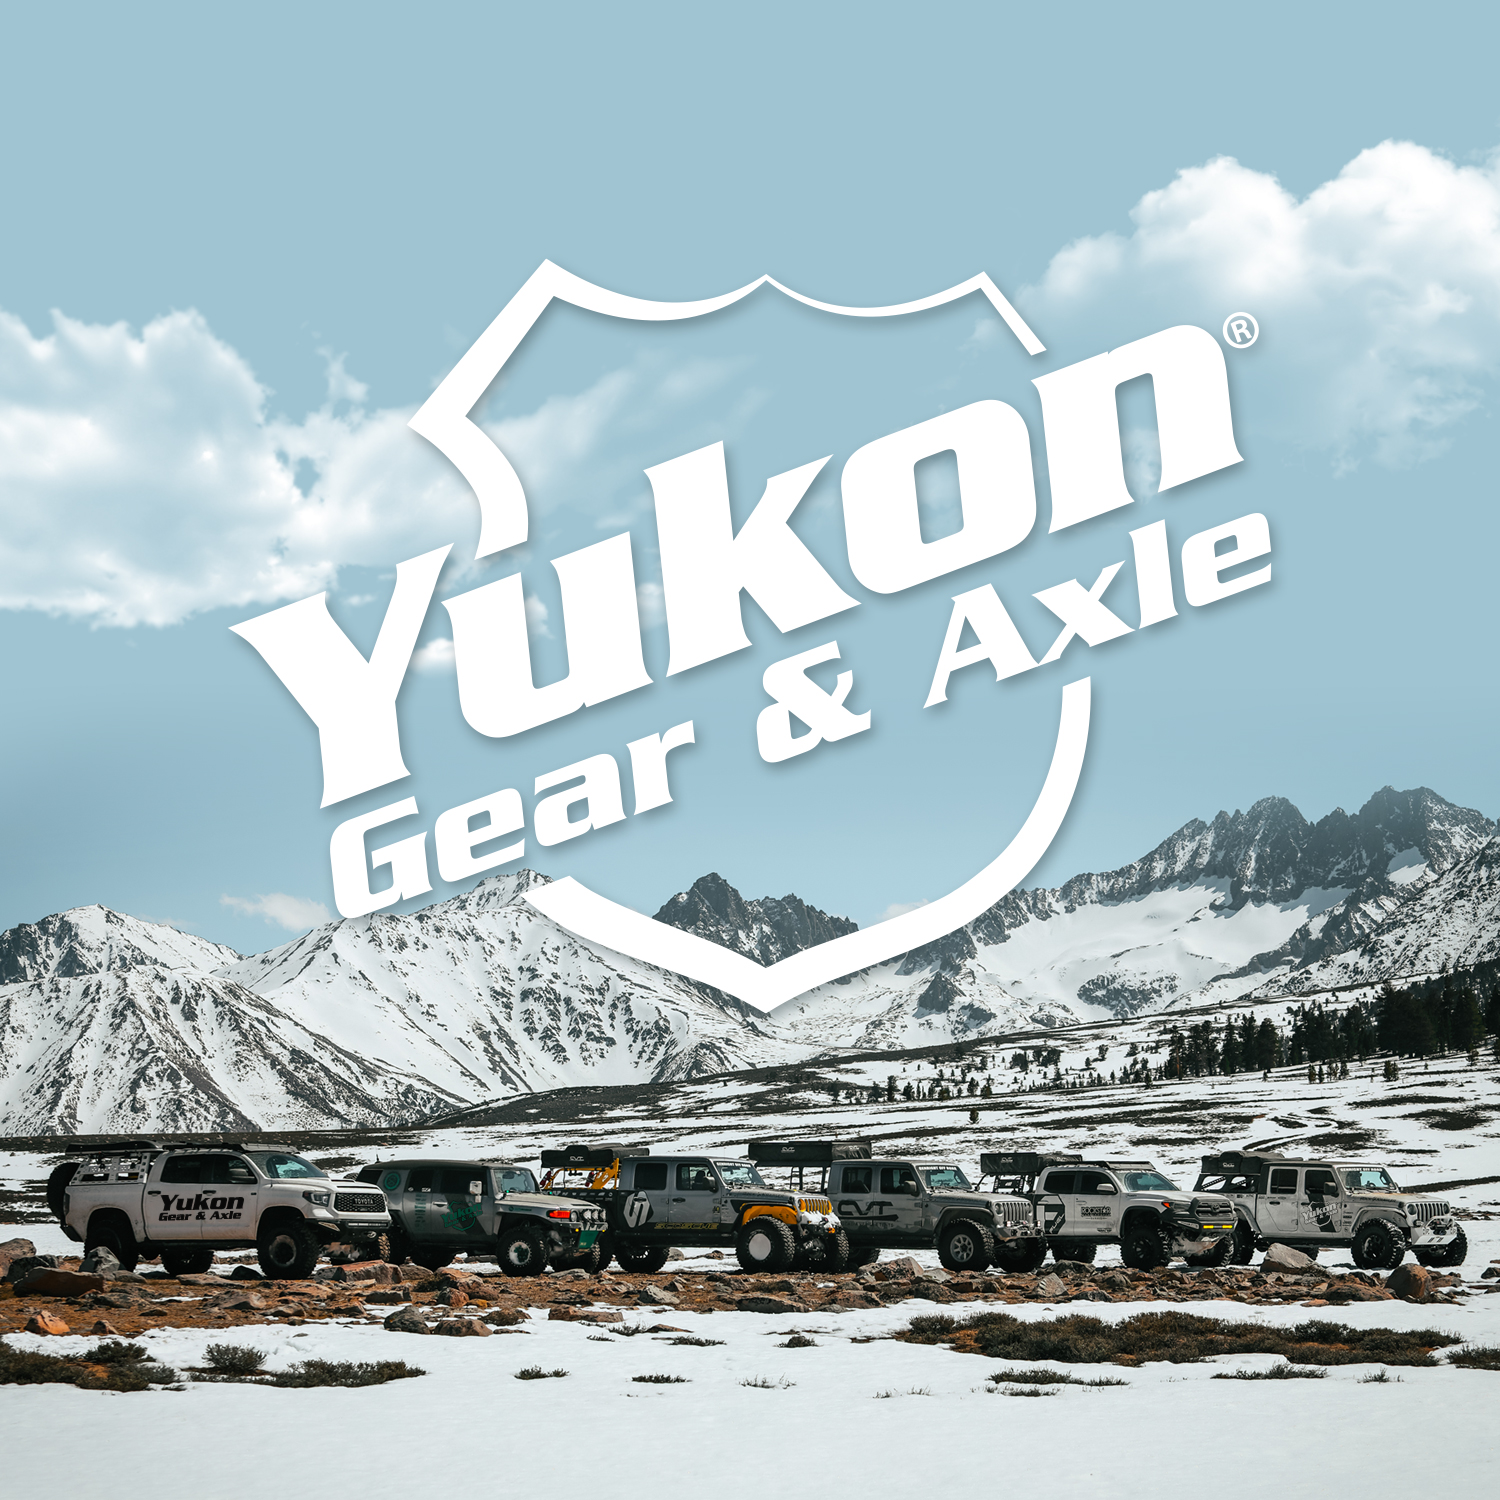 Yukon standard open spider gear kit for 10.25" & 10.5" Ford with 35 spline axles